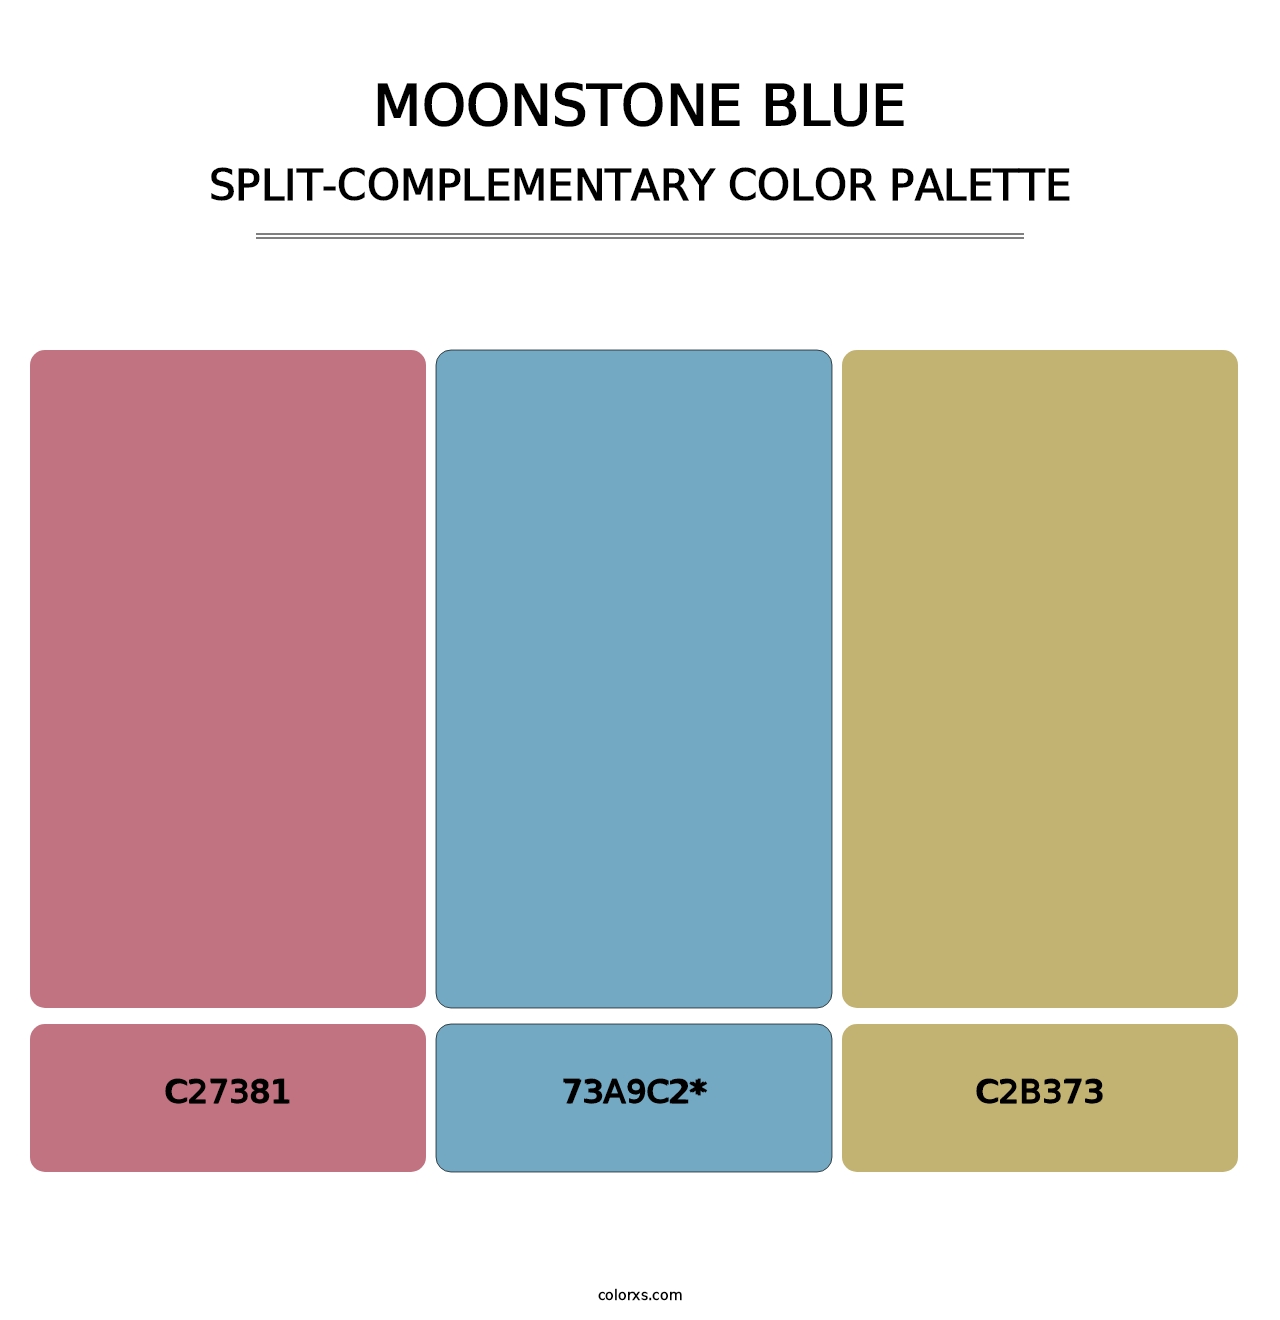 Moonstone Blue - Split-Complementary Color Palette